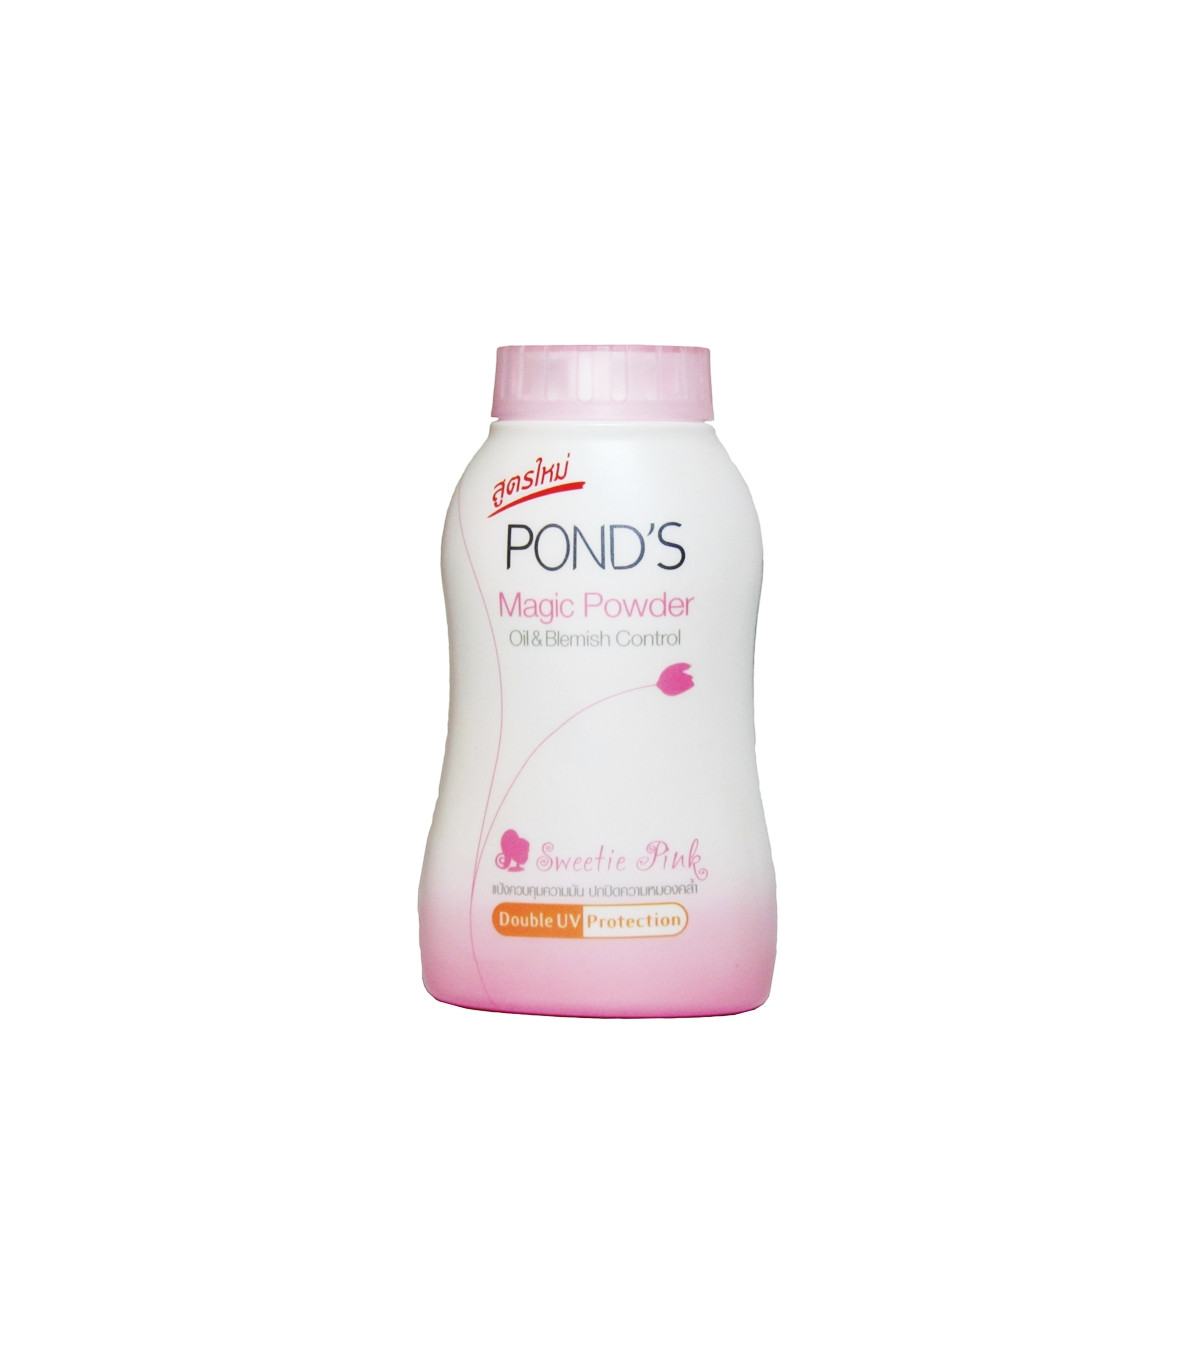 POND'S Sweetie Pink Magic Powder - 25g